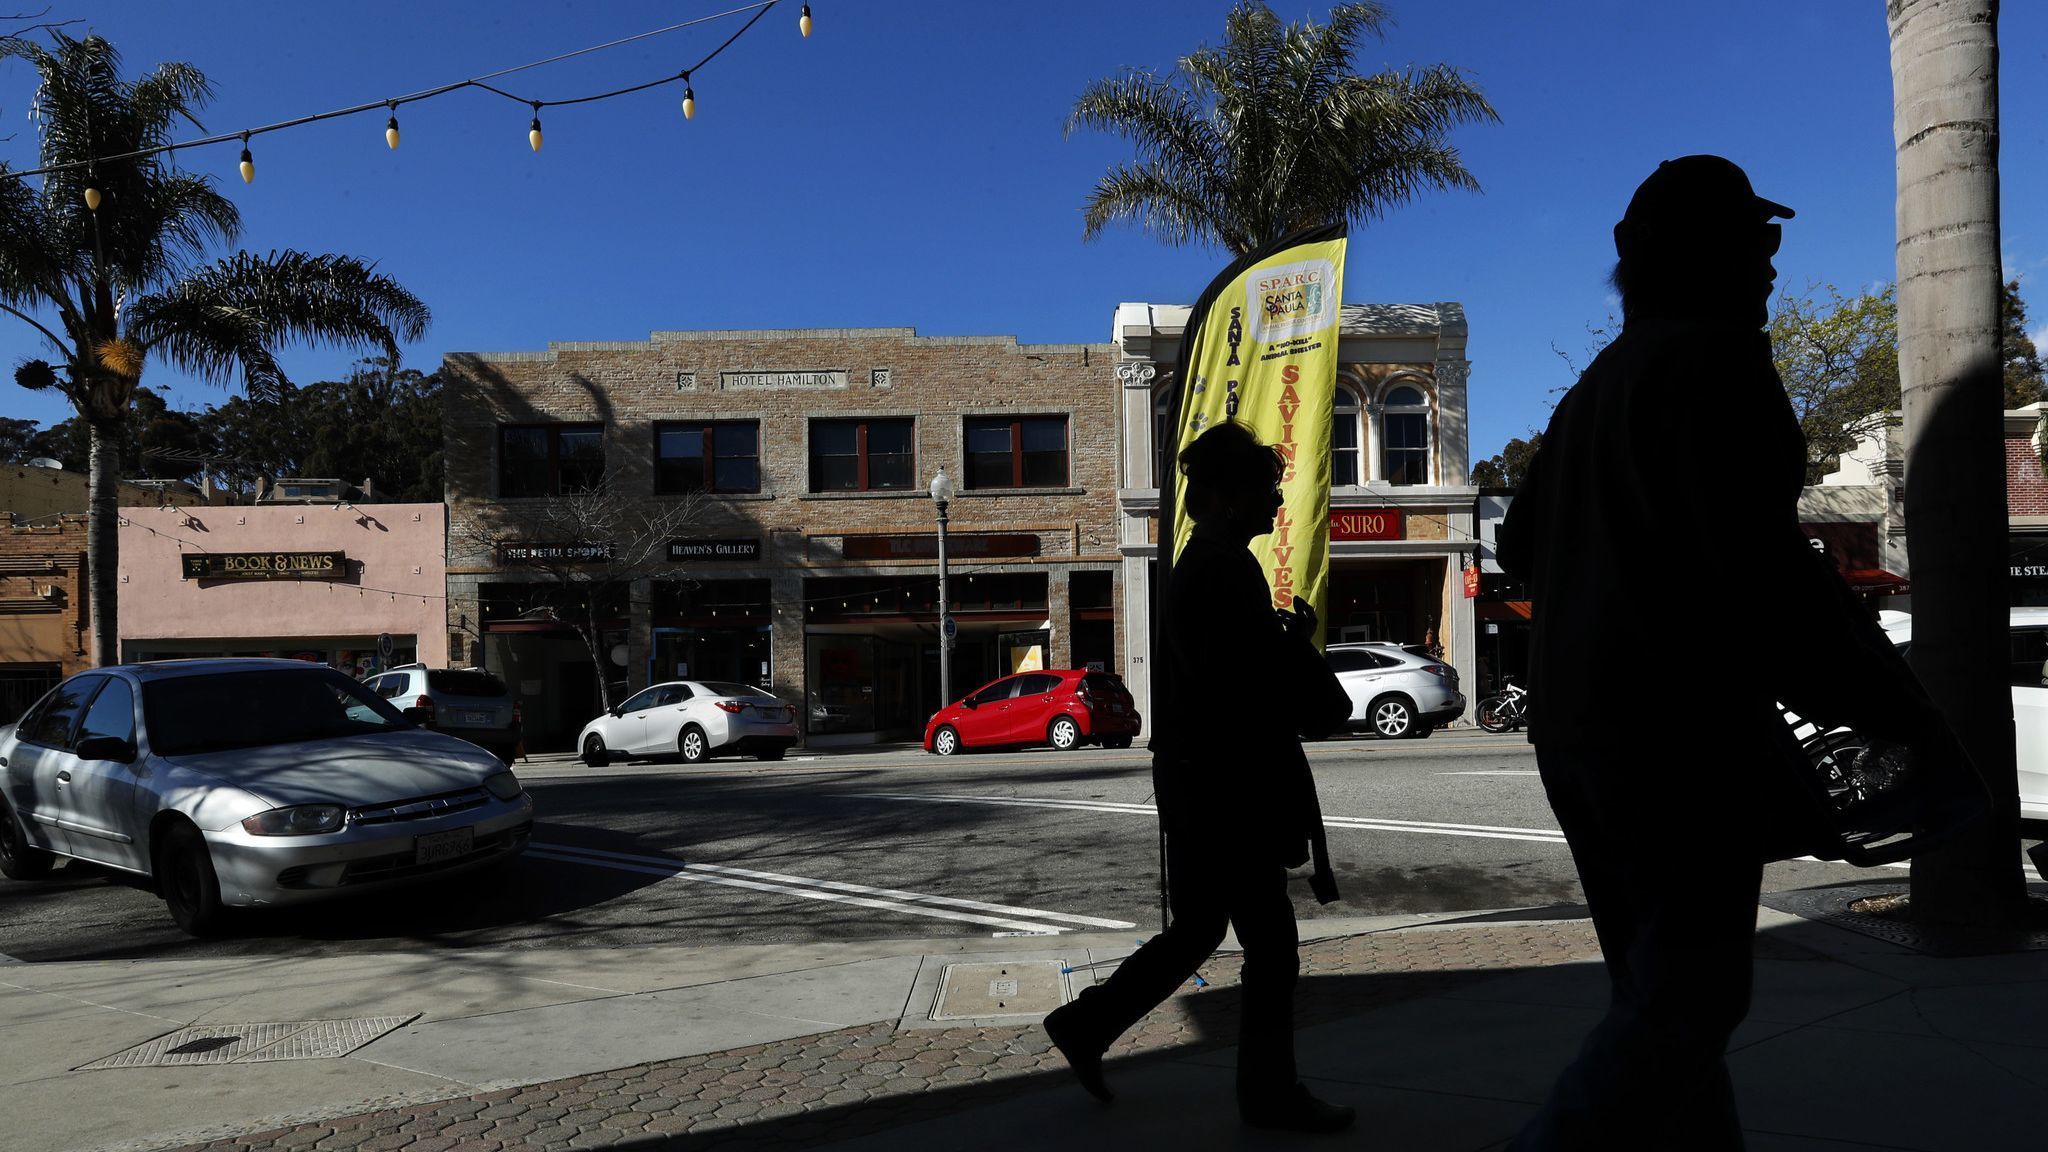 VENTURA, CA-MARCH 26, 2018: Pedestrians walk along Main St. in downtown Ventura with the Hotel Hami